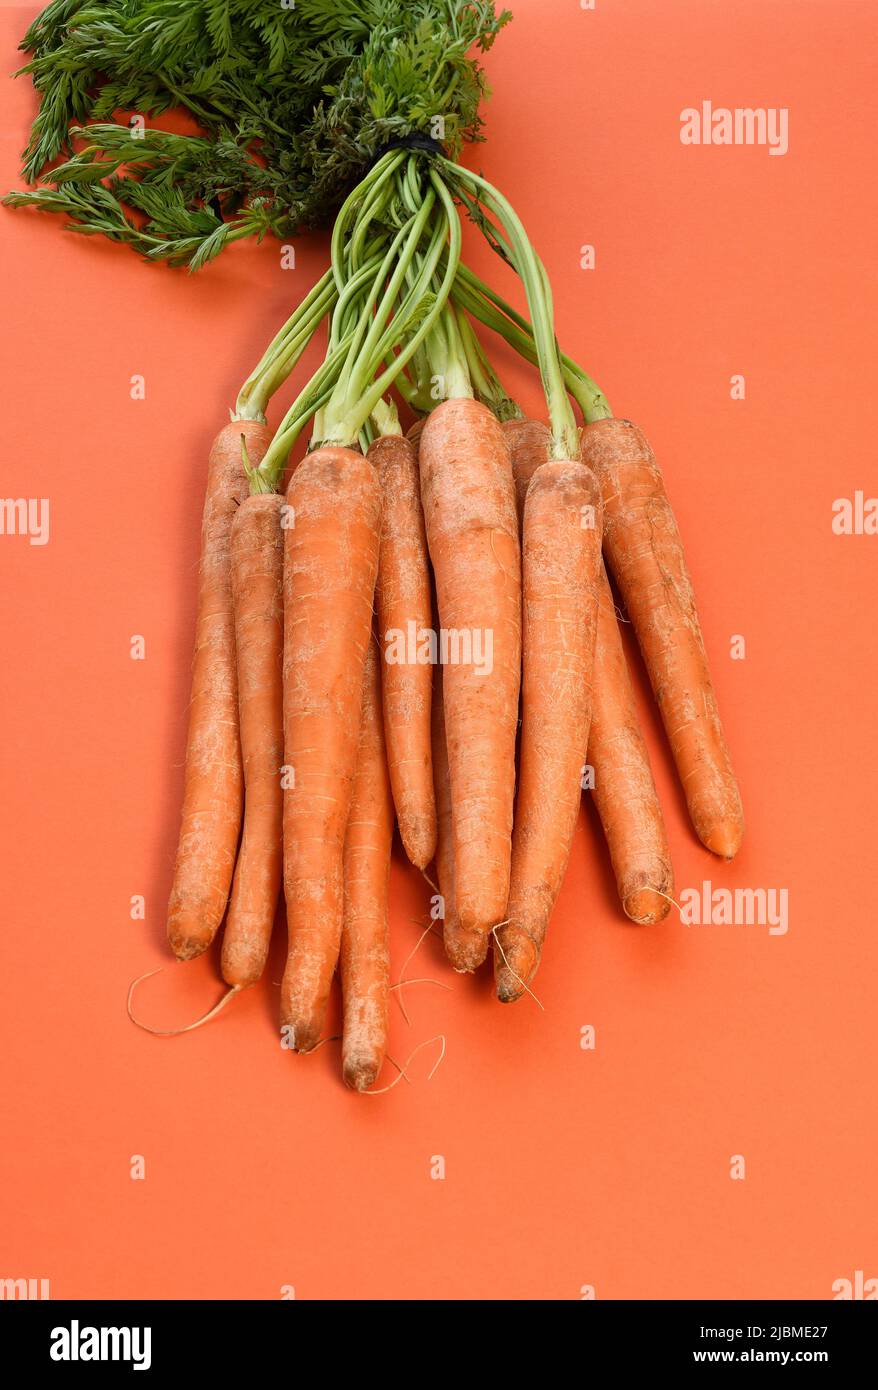 Un manojo de zanahorias frescas con tallos verdes Foto de stock